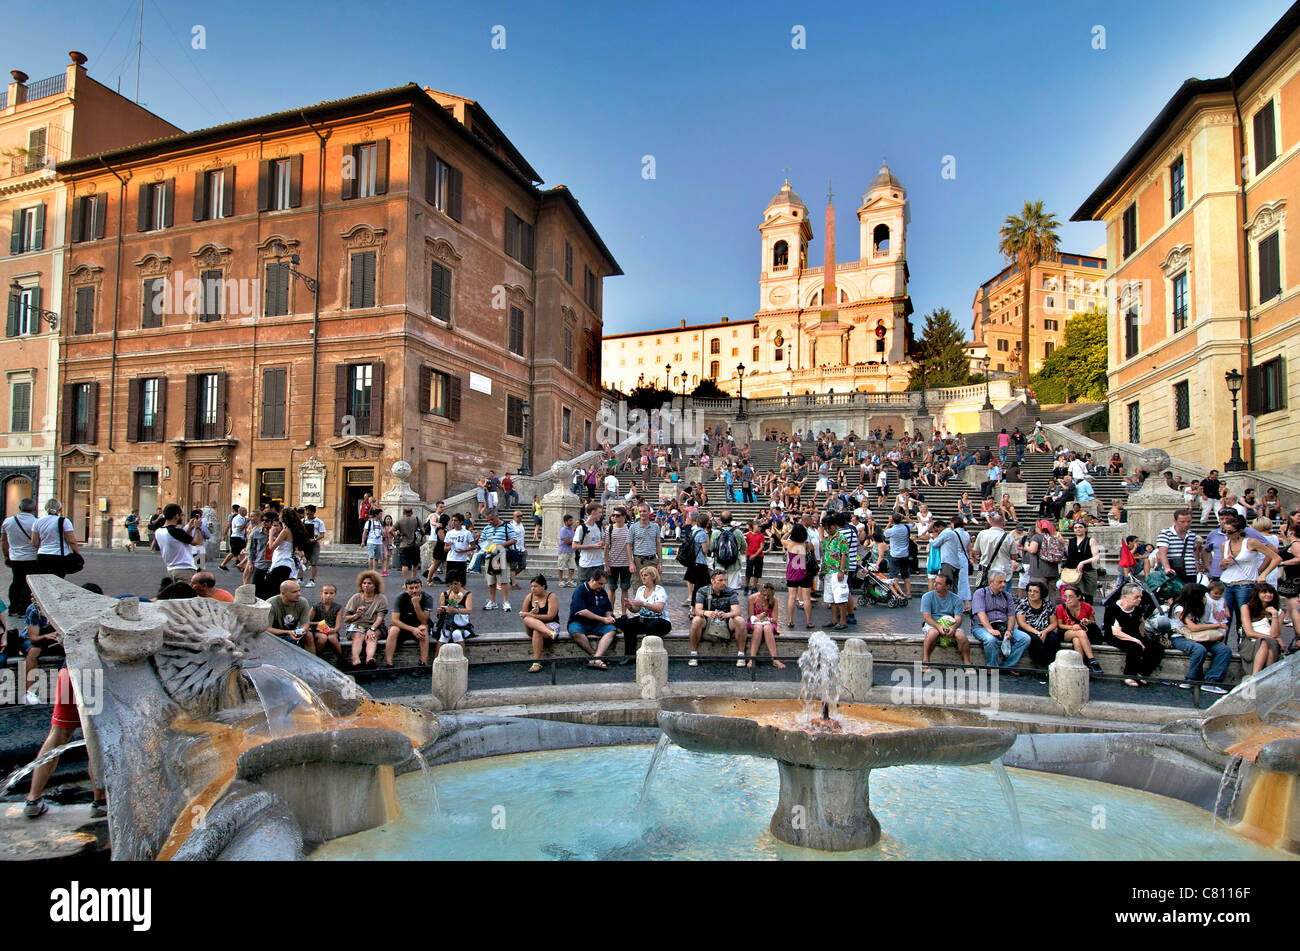 Spanish Steps, Rome - Piazza di Spagna and Fontana della Barcaccia fountain with tourists at dusk Stock Photo